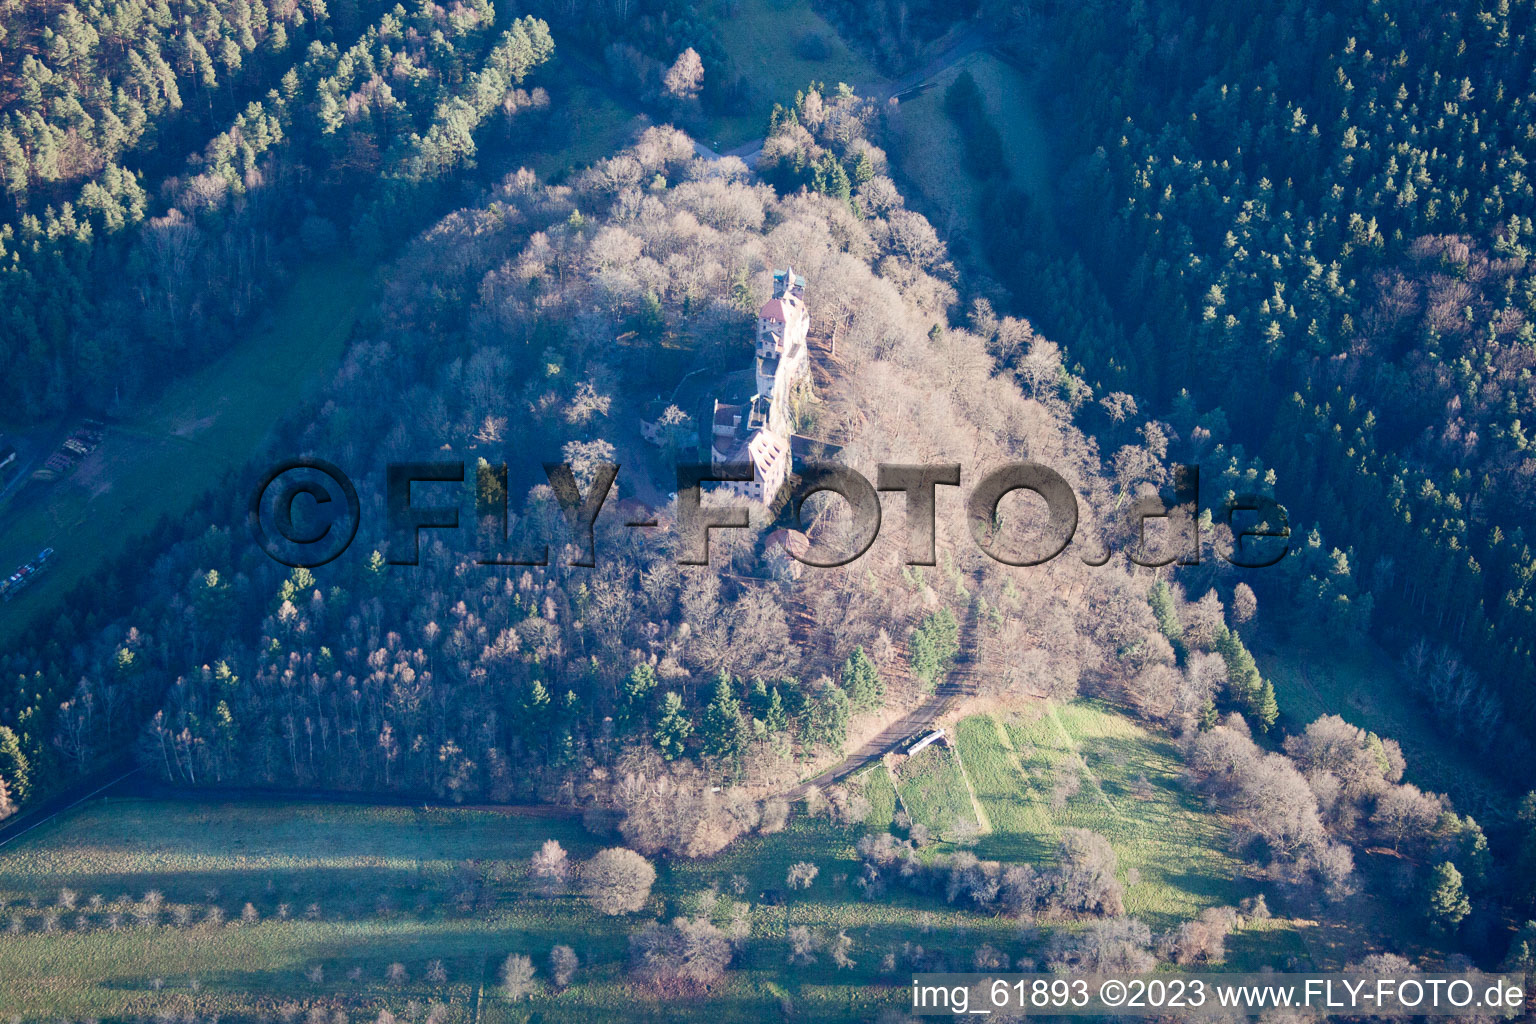 Erlenbach, Berwartstein Castle in Erlenbach bei Dahn in the state Rhineland-Palatinate, Germany from a drone